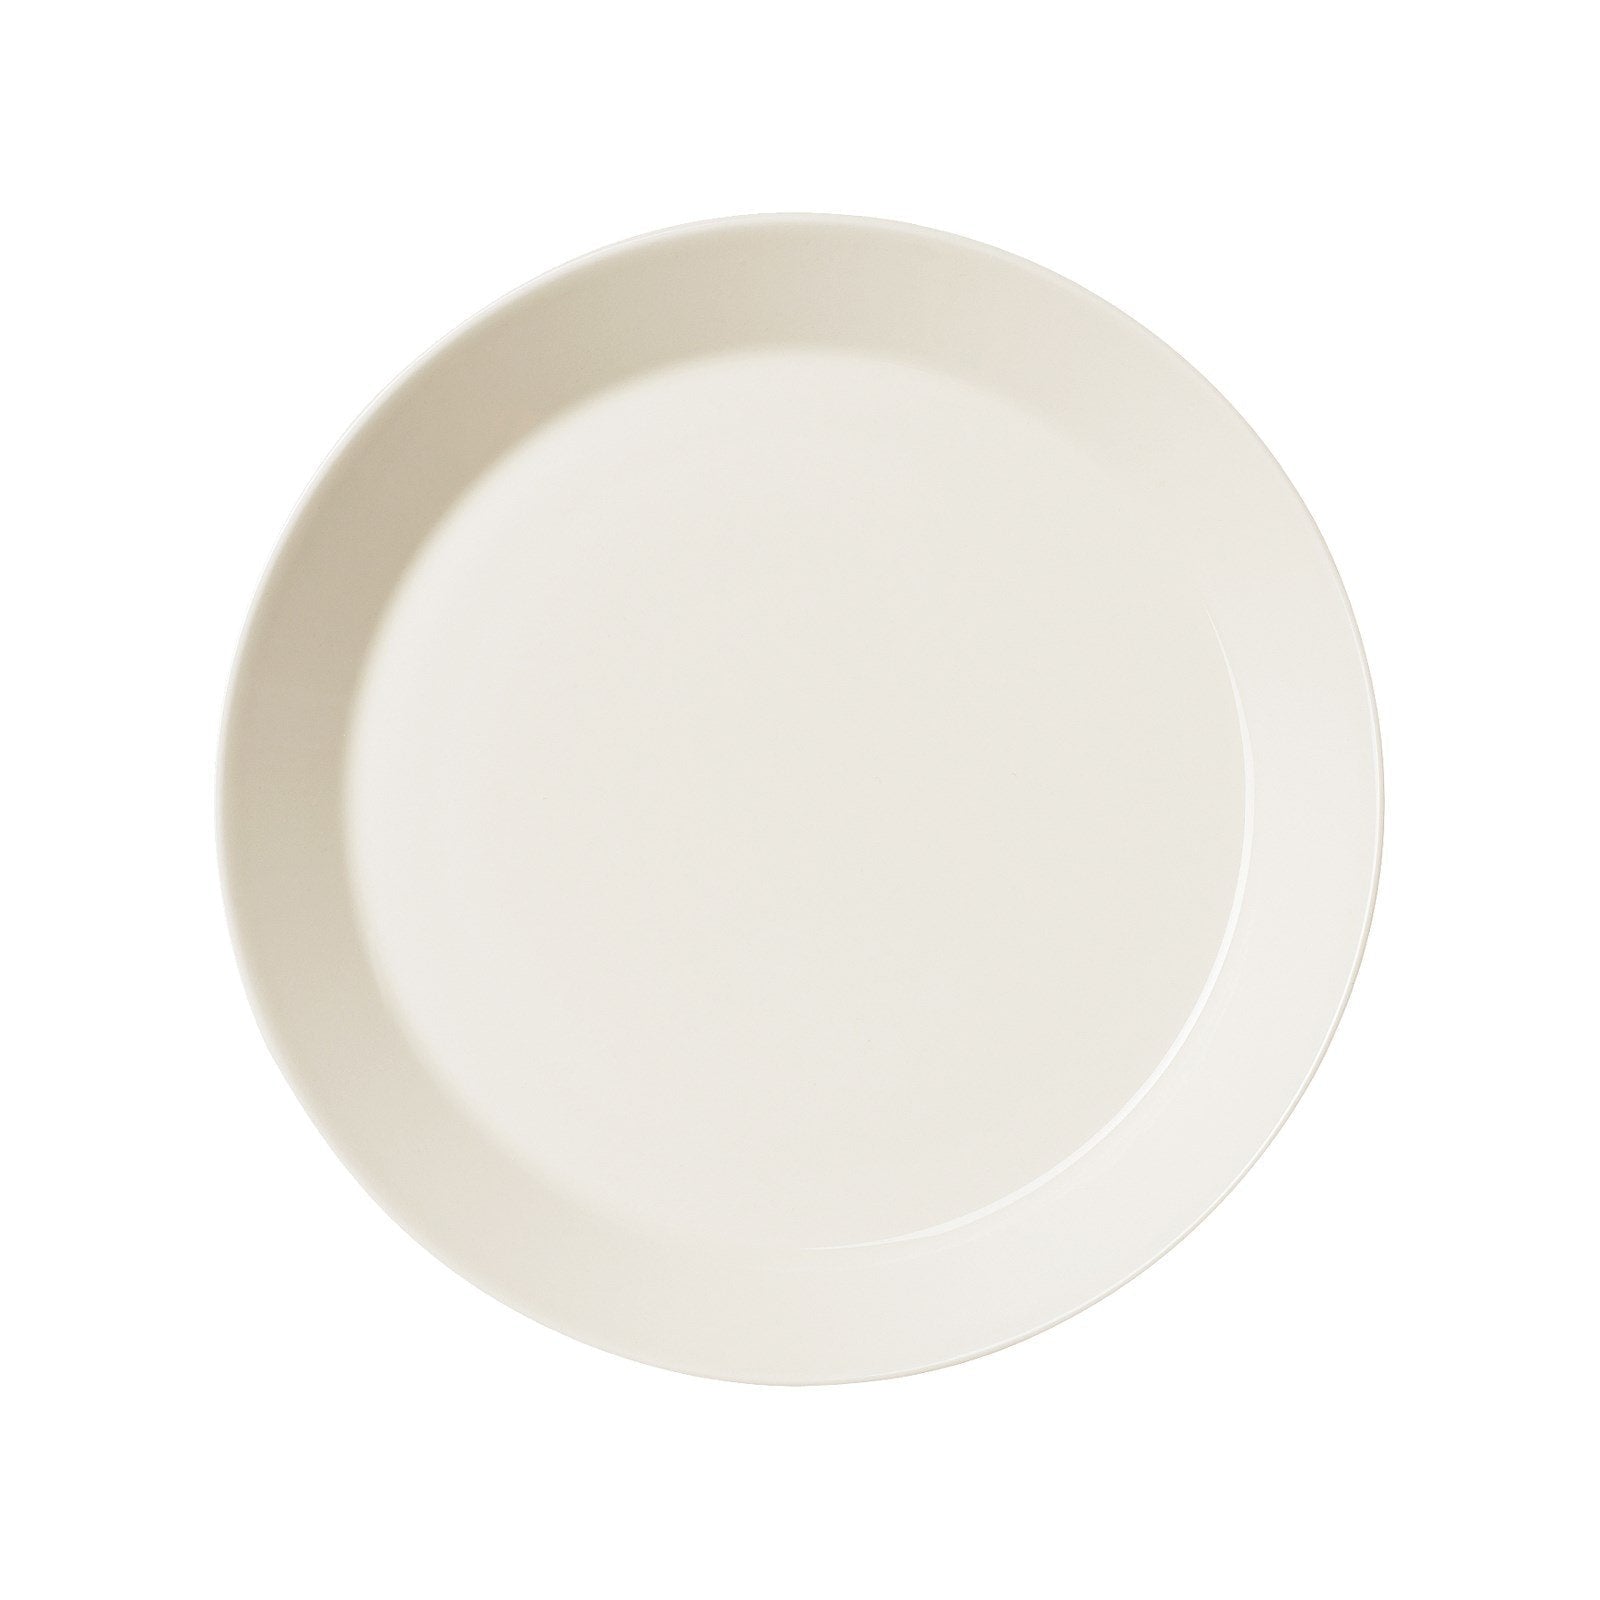 Iittala Teema Plate Flat White, 26 cm